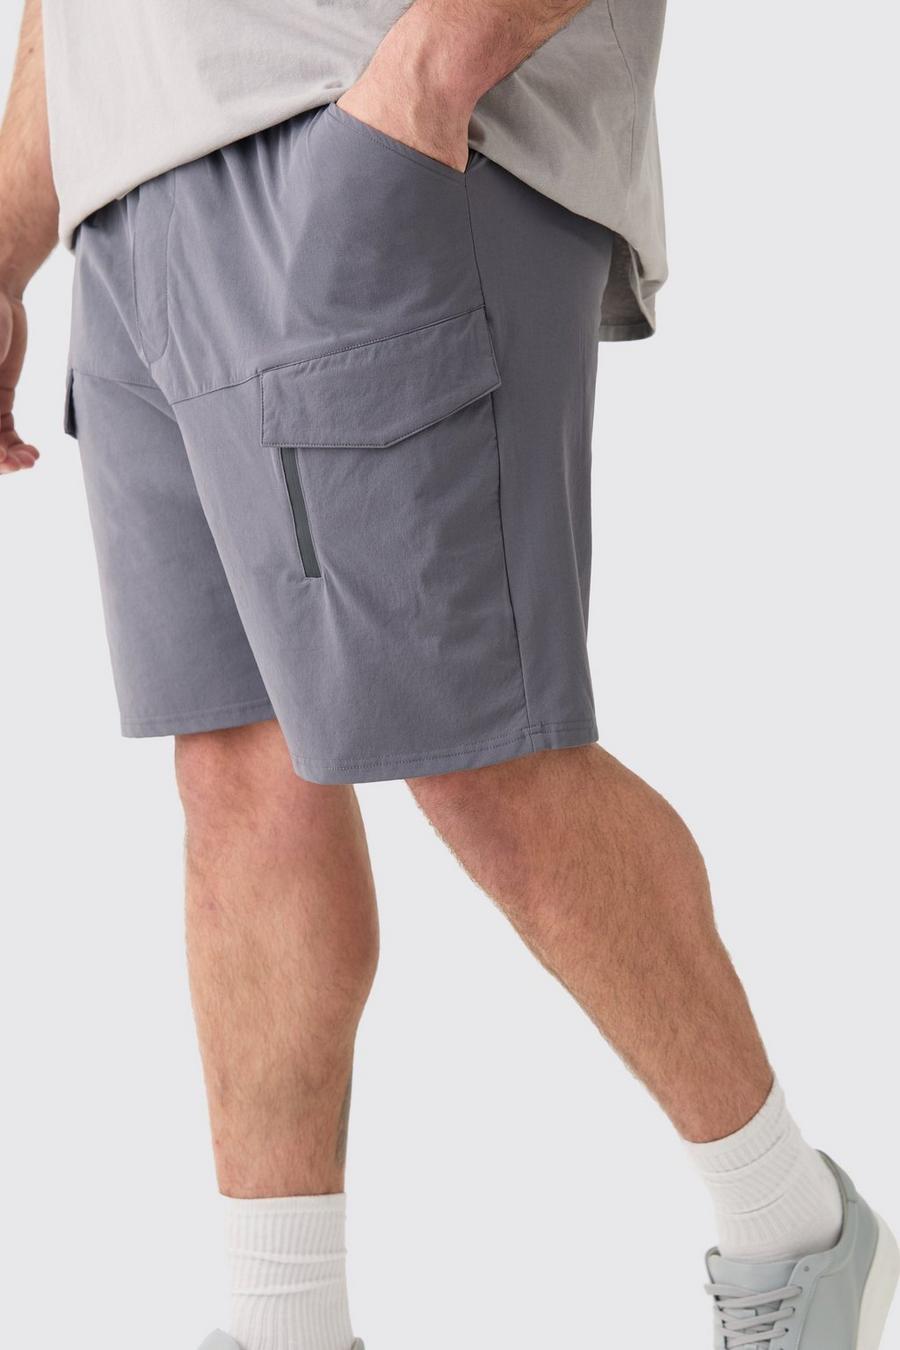 Pantalón corto Plus cargo elástico ligero holgado con cremallera, Charcoal